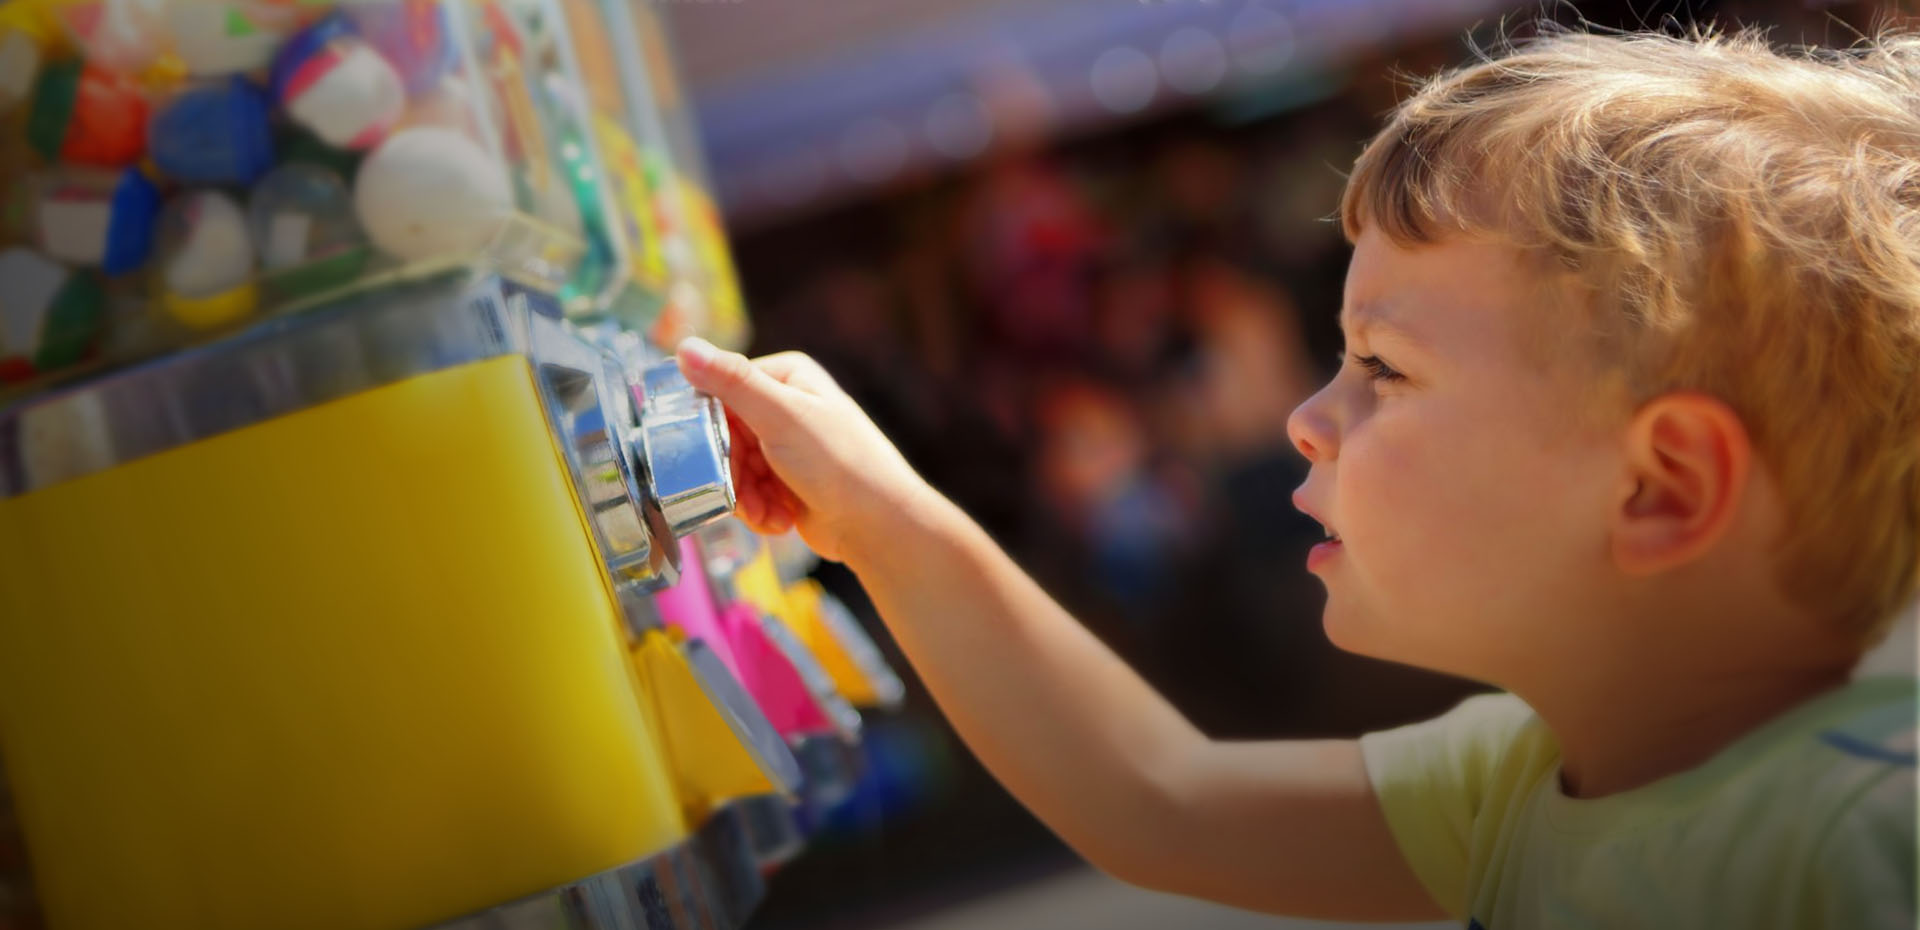 Installers Of Toys Vending Machines For Restaurants Magna Park